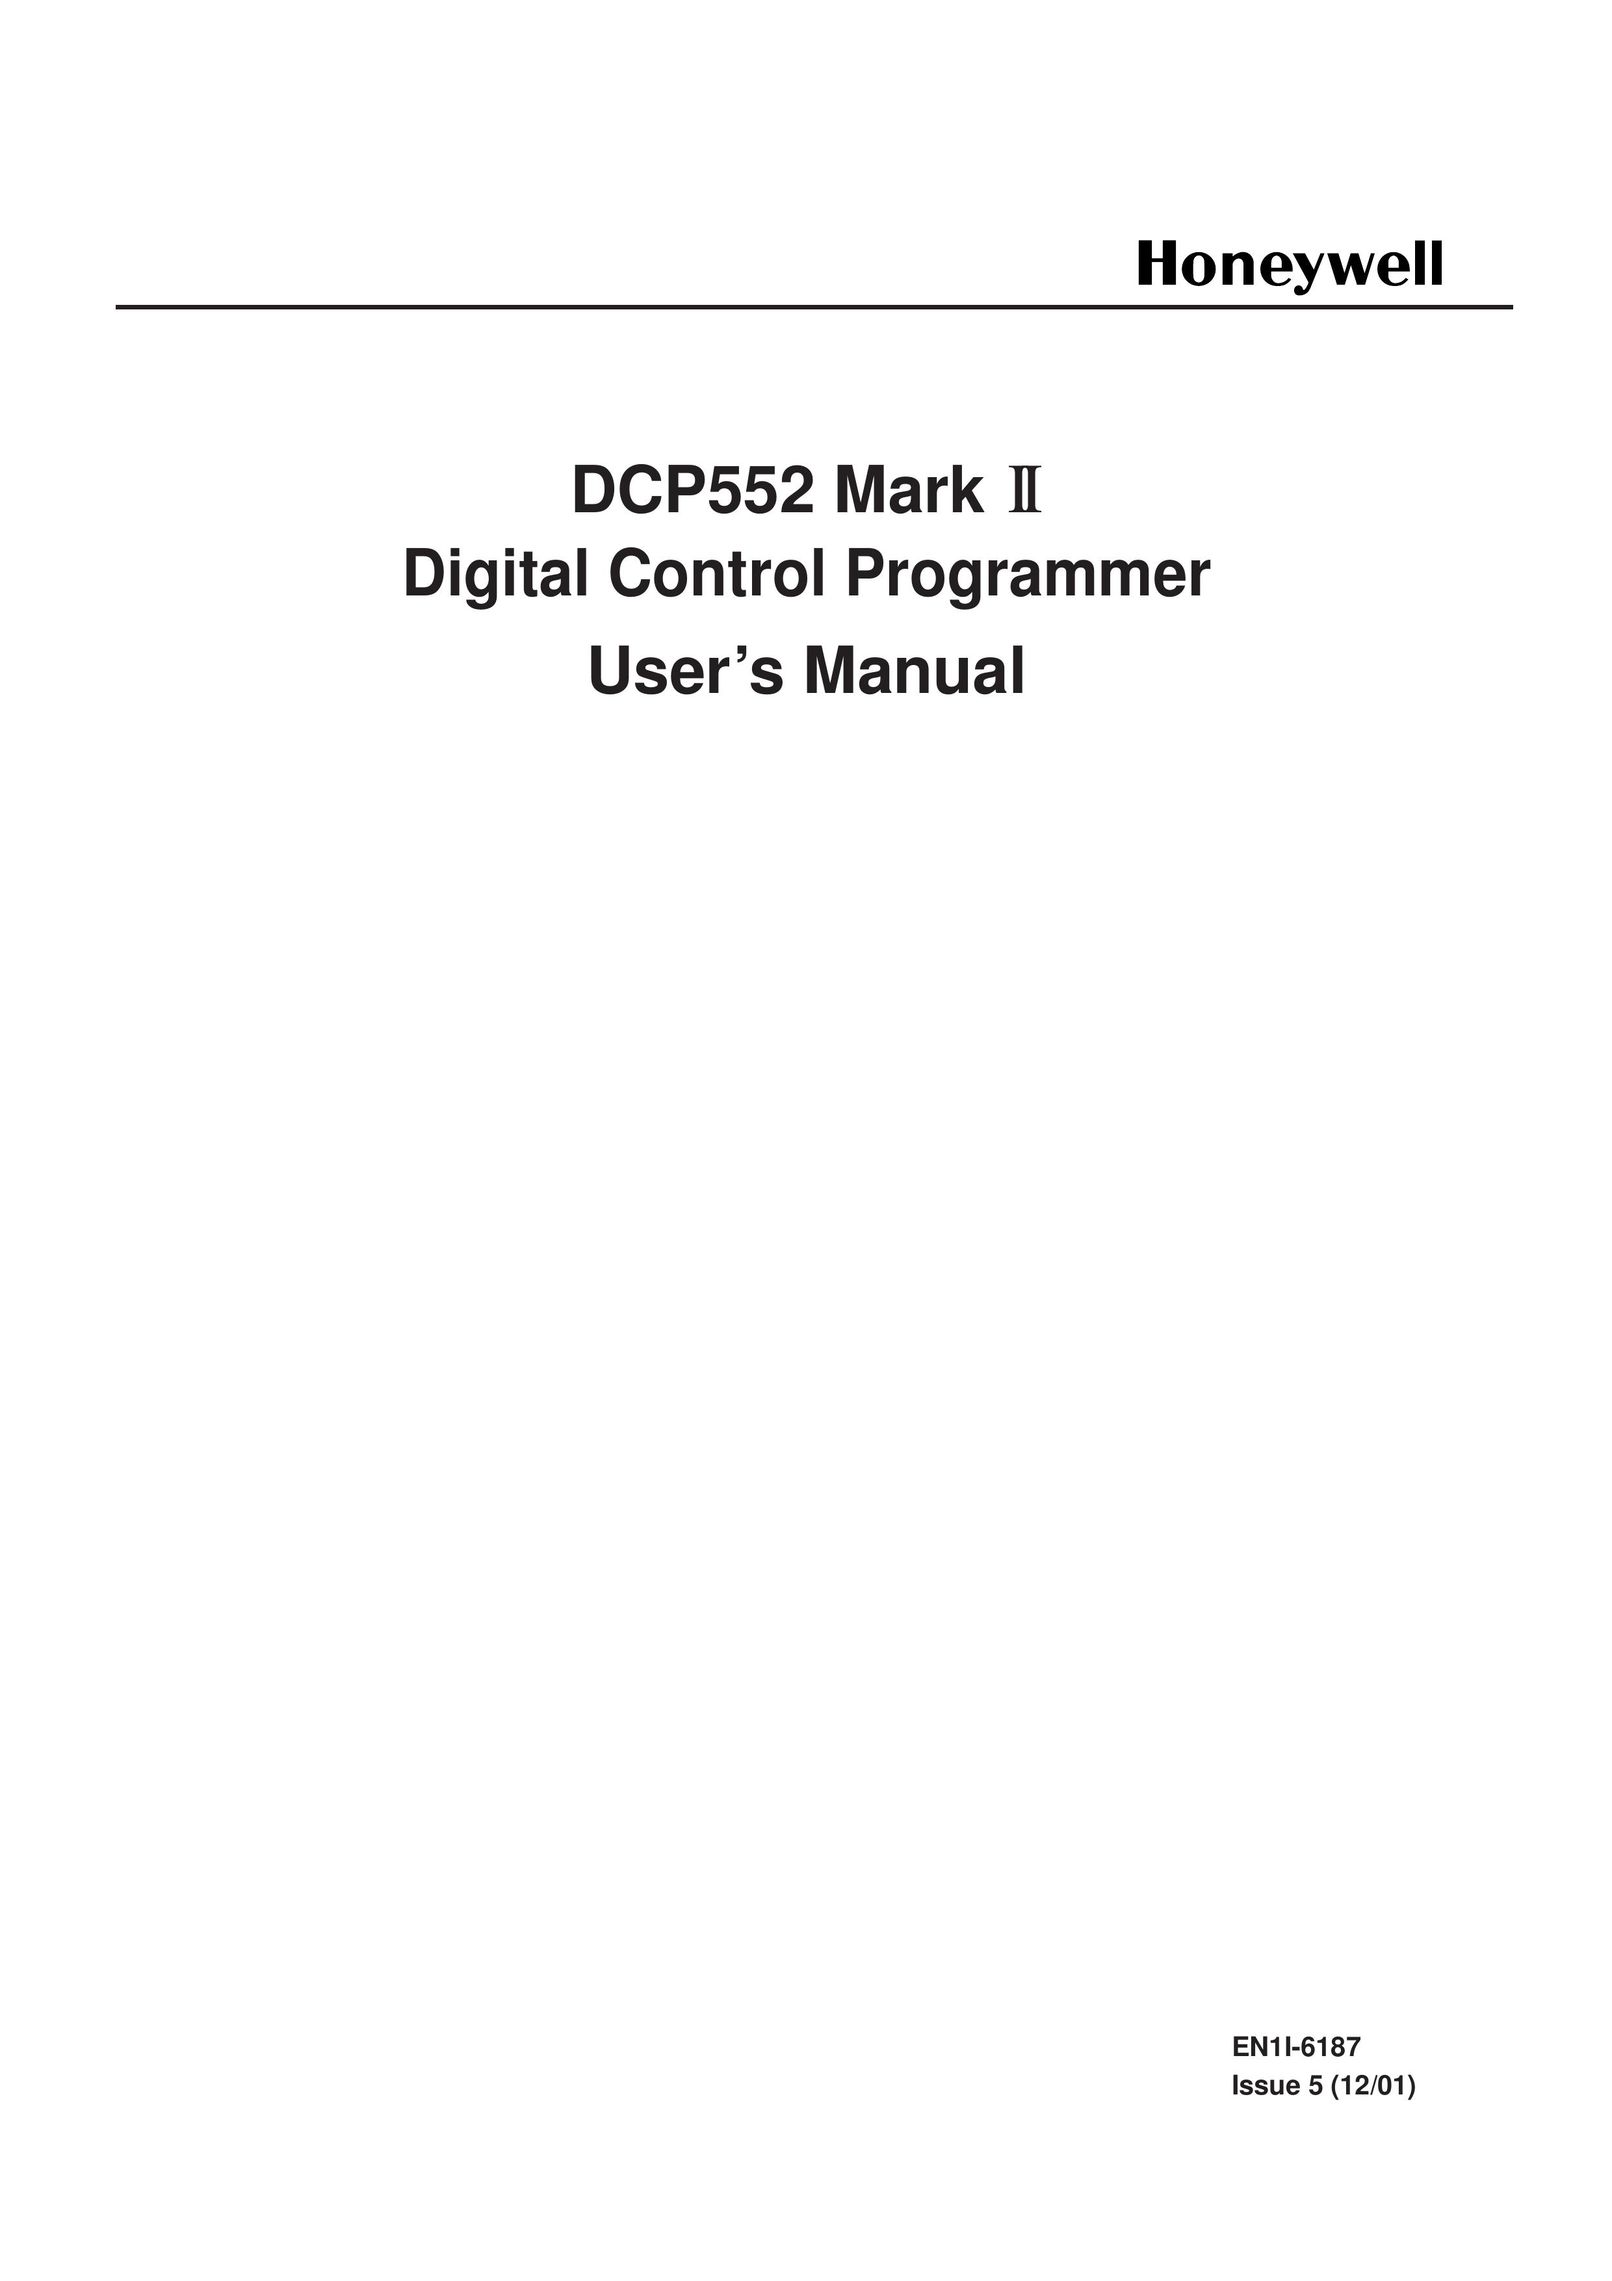 Honeywell DCP552 Mark II Network Card User Manual